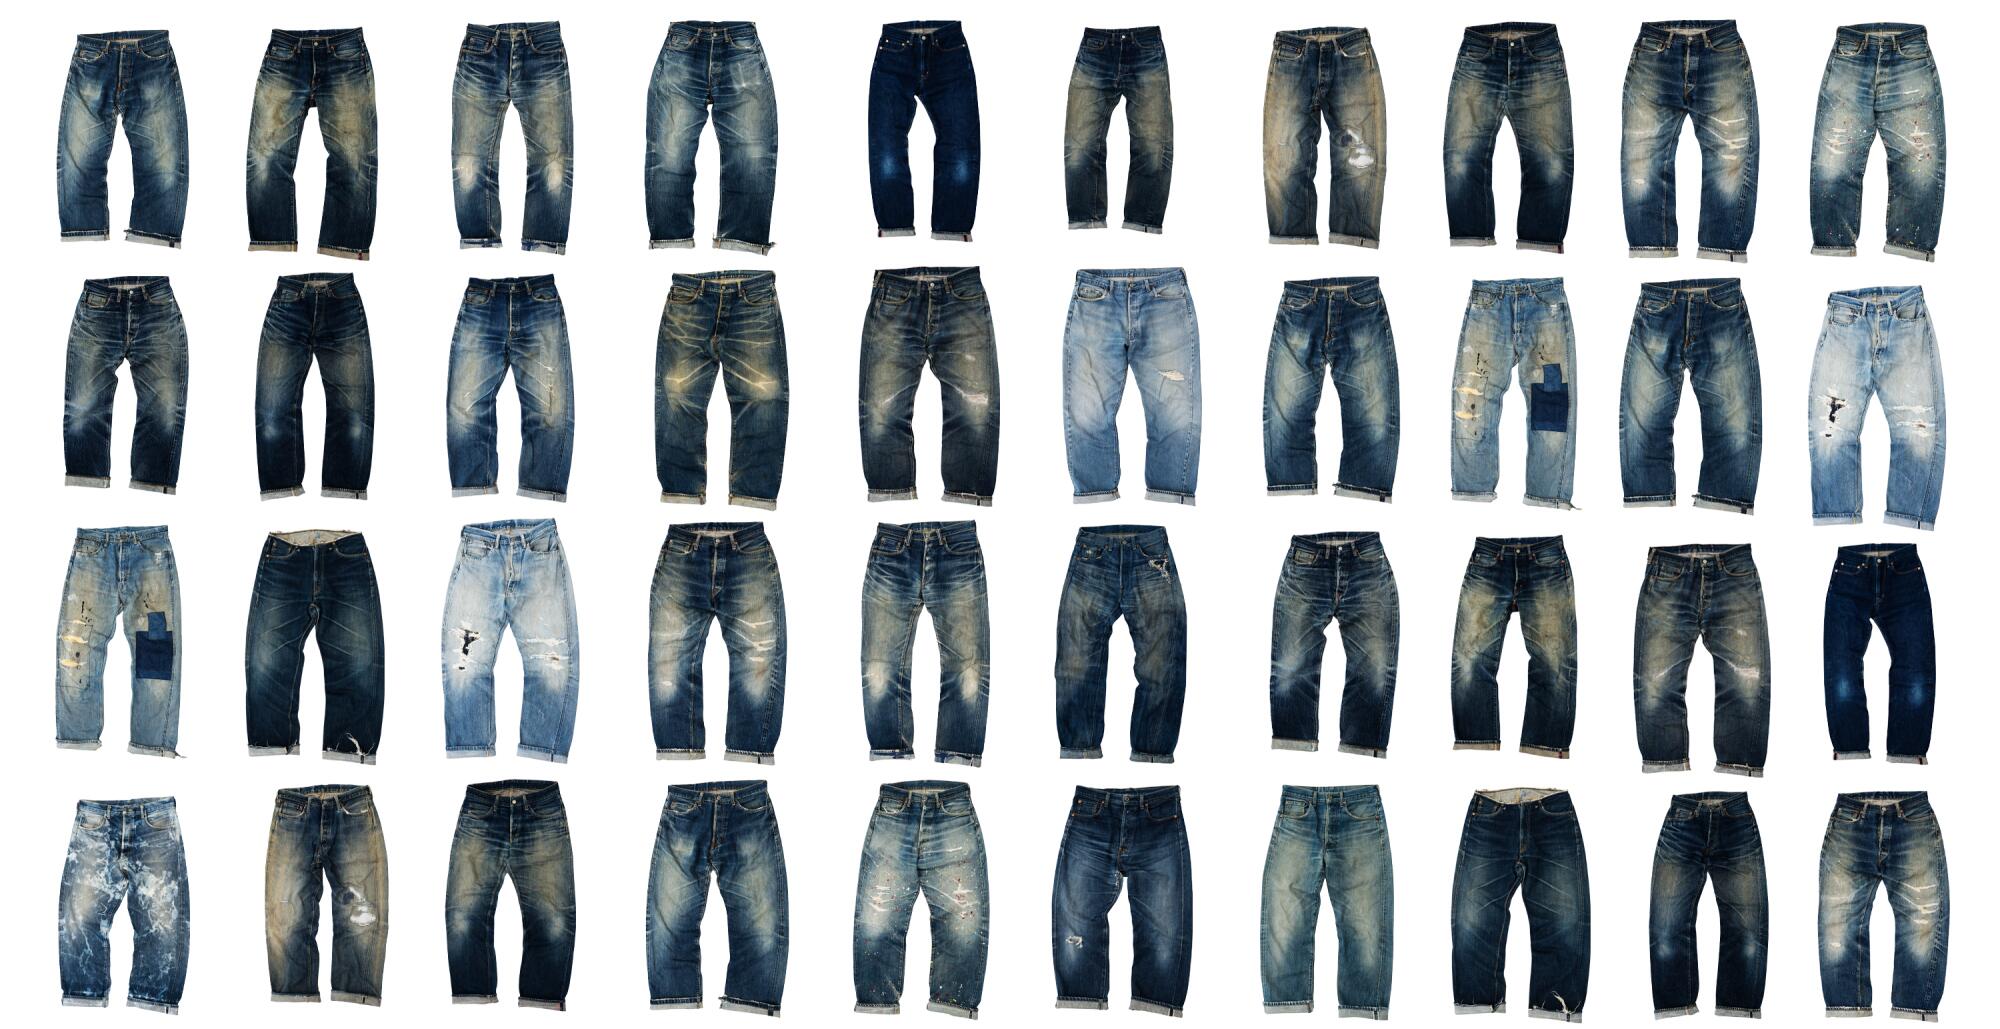 Vintage Japanese selvedge denim jeans at Transnomadica’s The Blue Chaper pop-up at Fred Segal